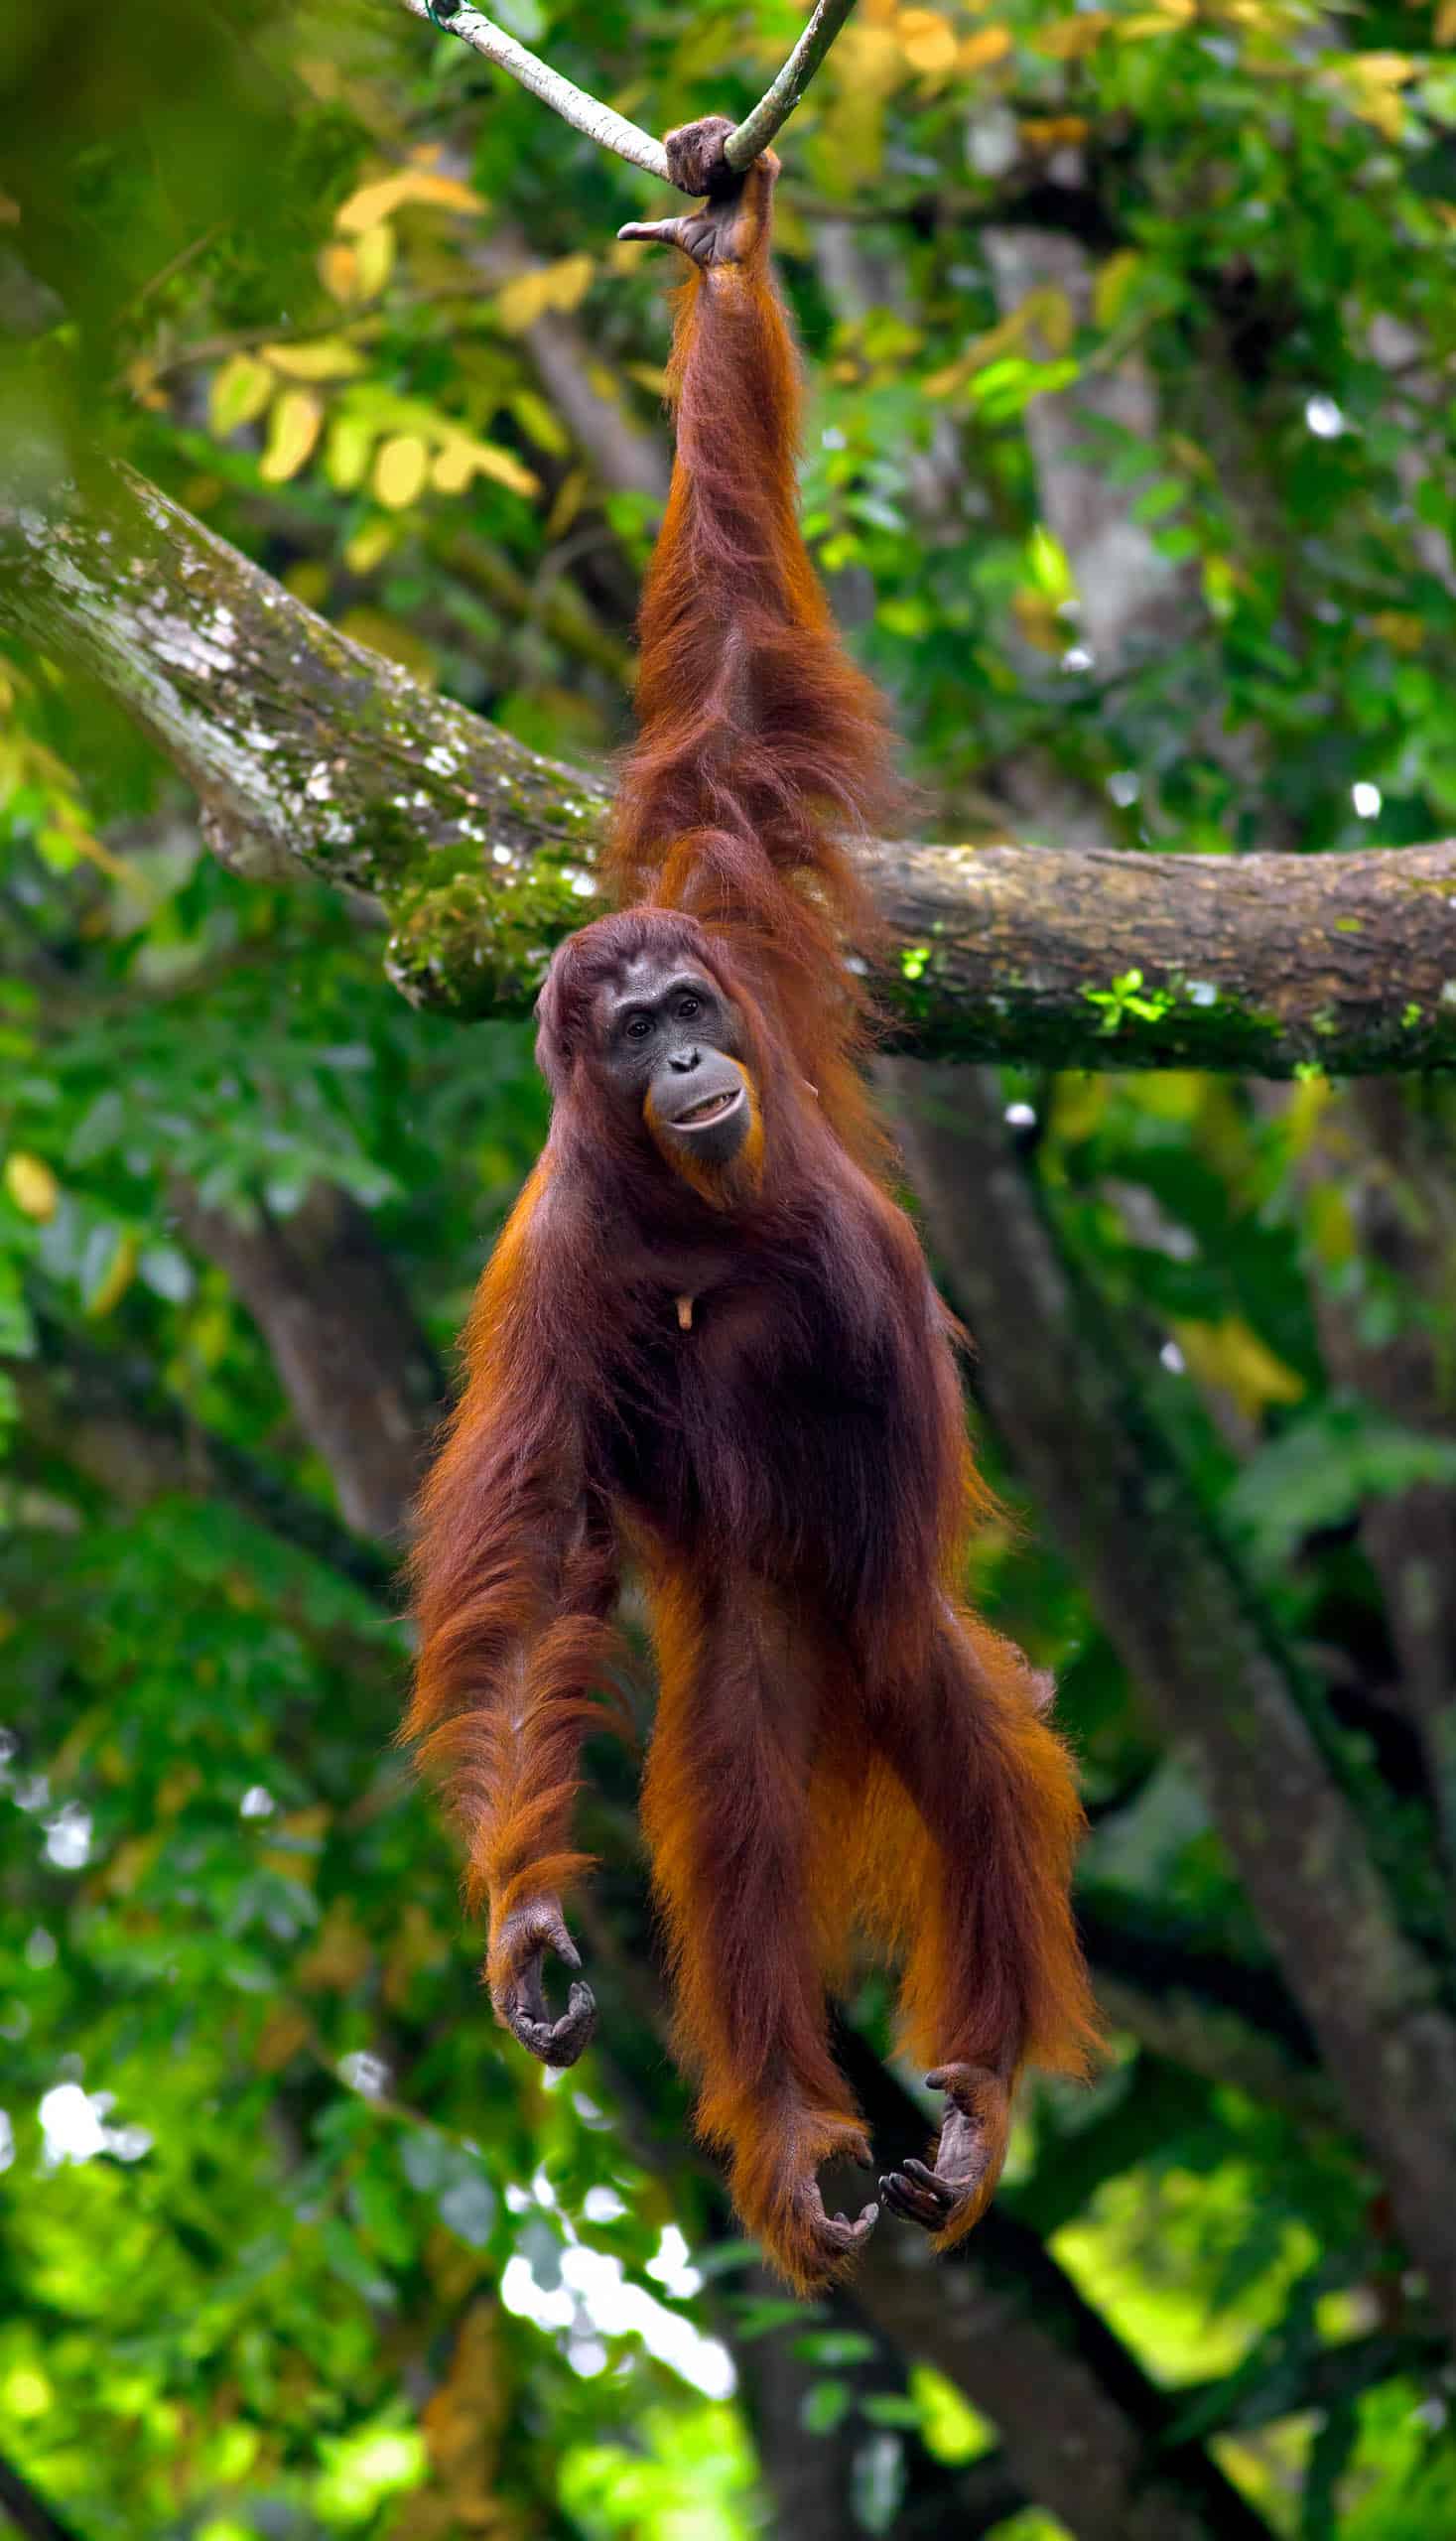 An orangutan hanging from a tree.